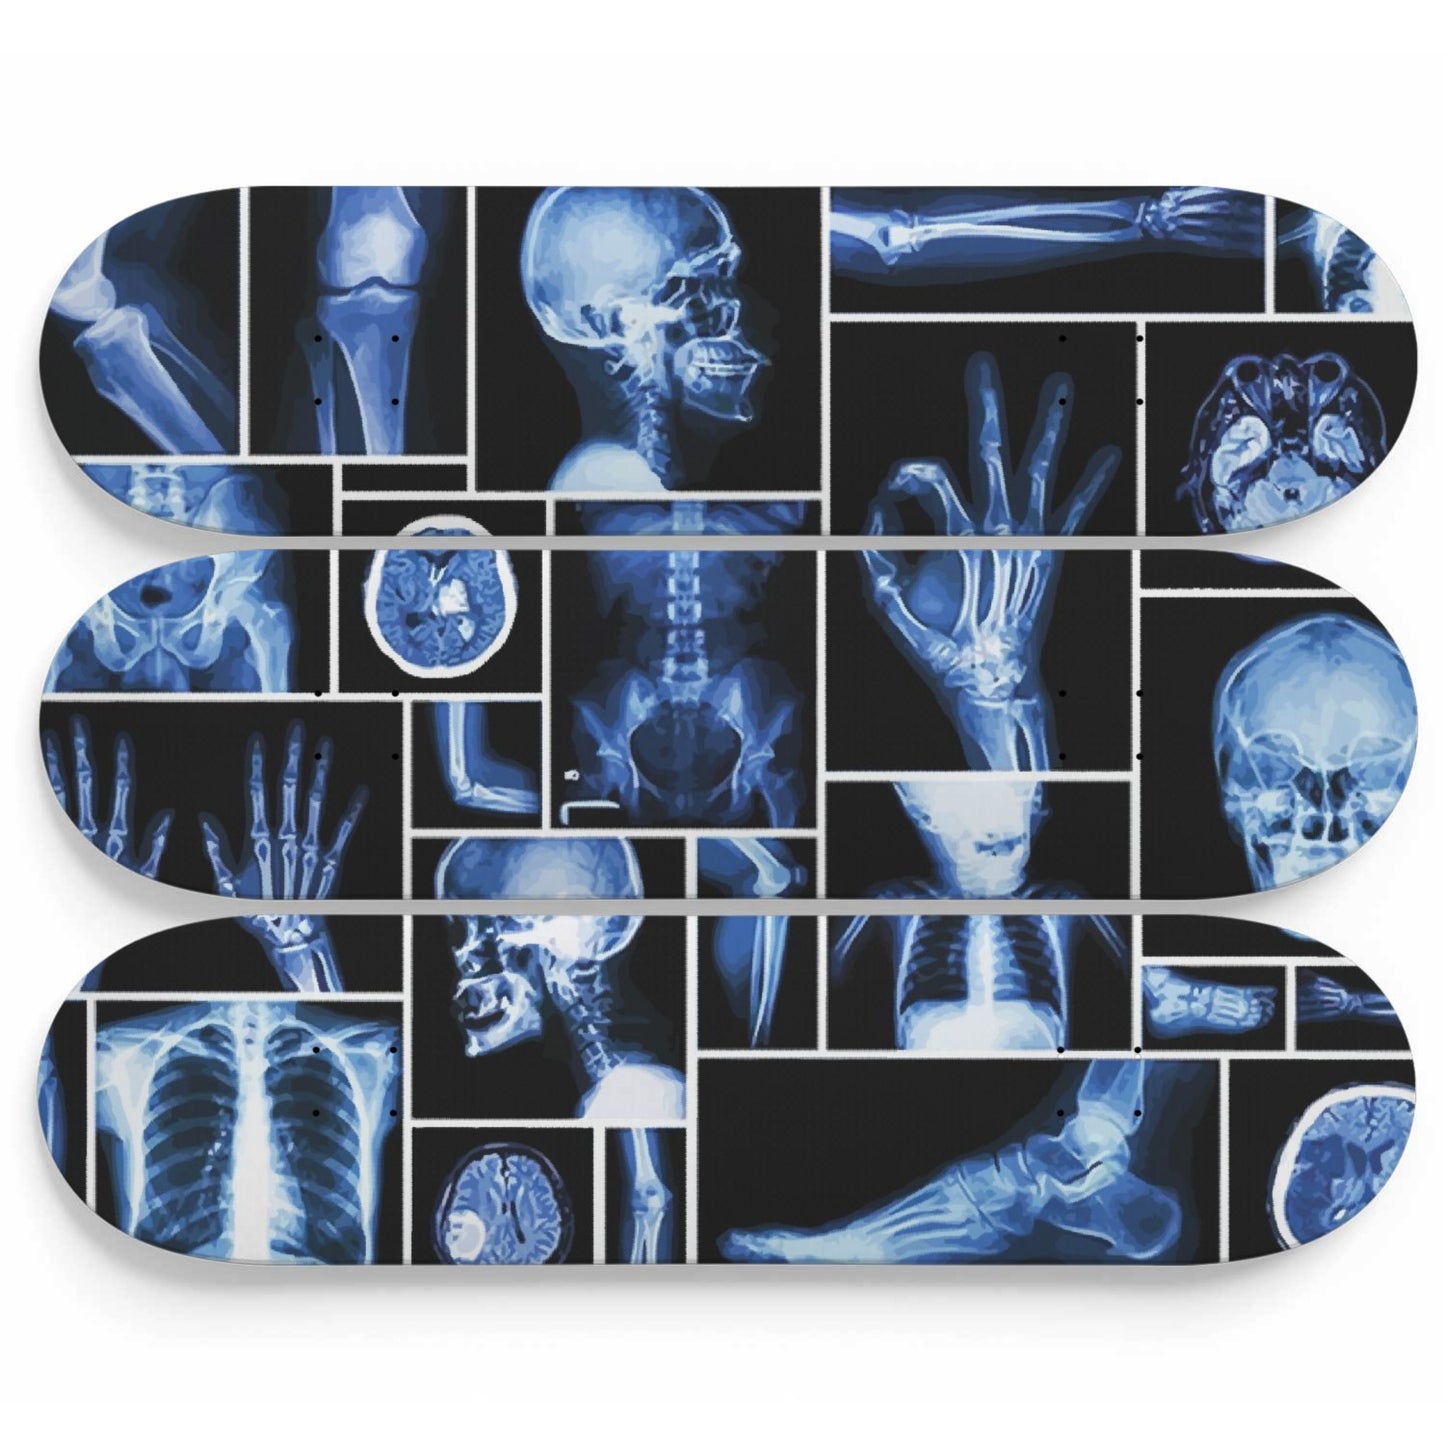 X-Ray Wallart | 3 Set of Skateboard Deck Wall Art, Hanged Room Decoration, Custom Unique Gift